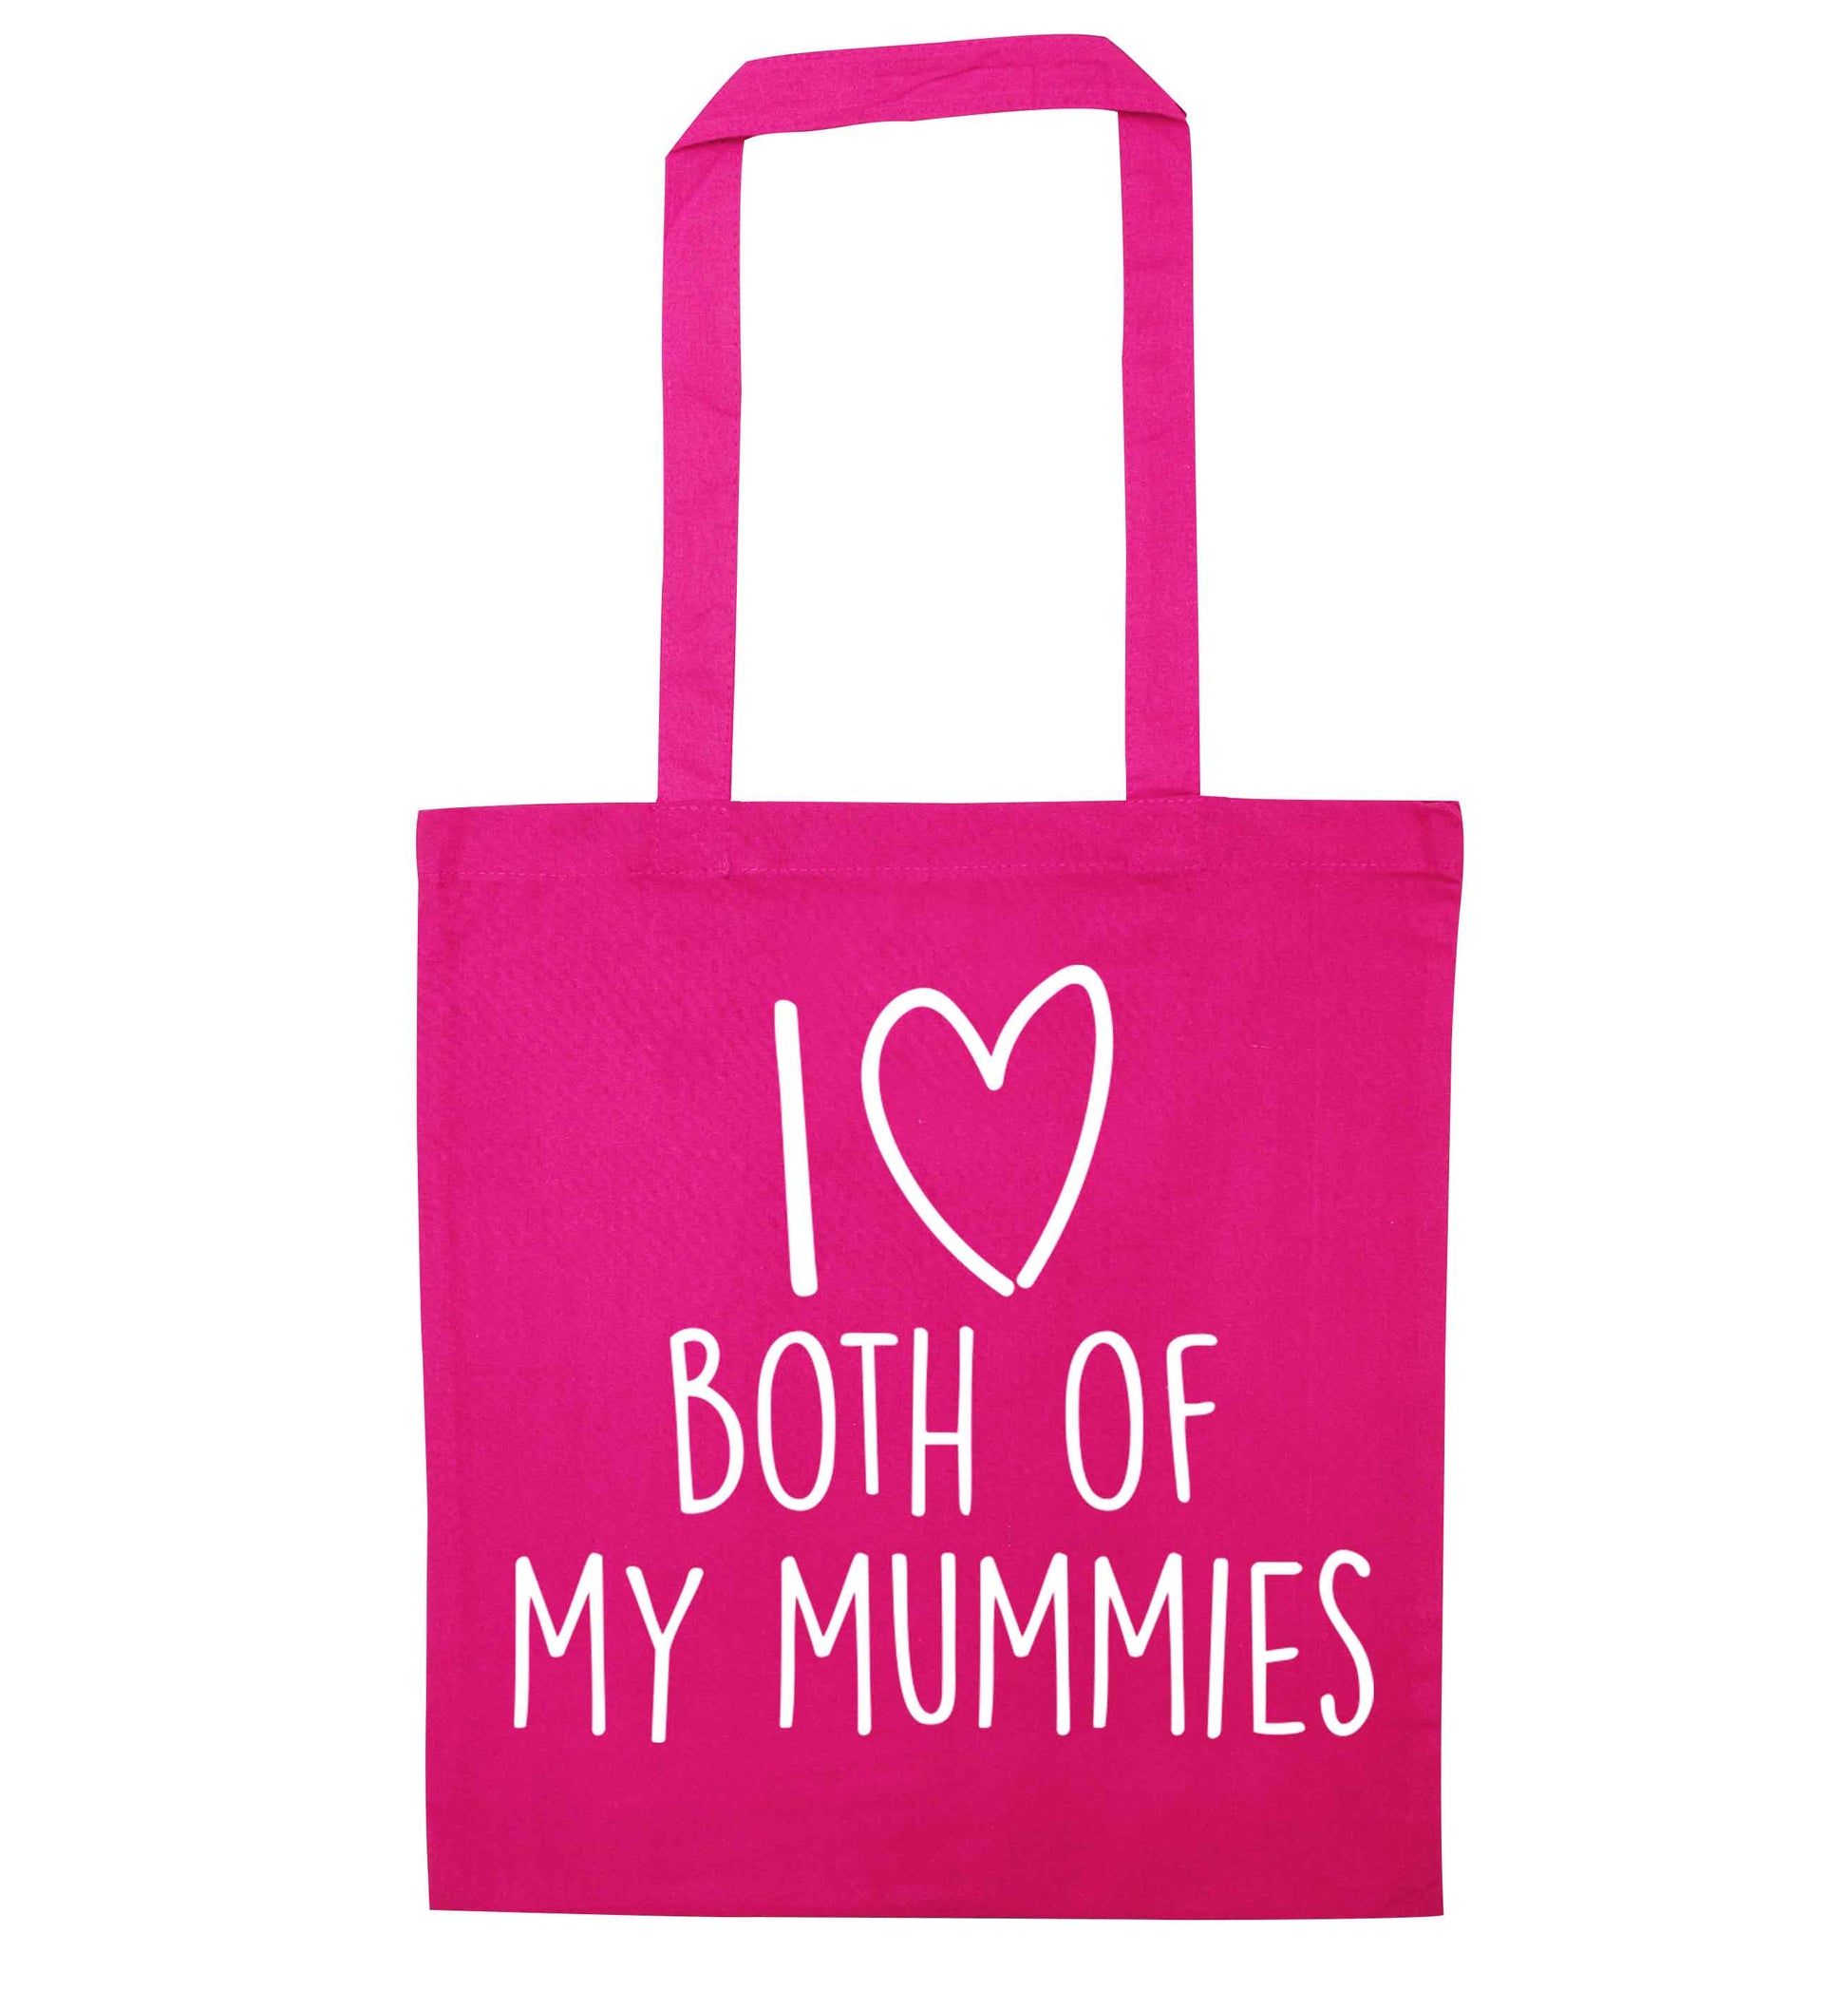 I love both of my mummies pink tote bag